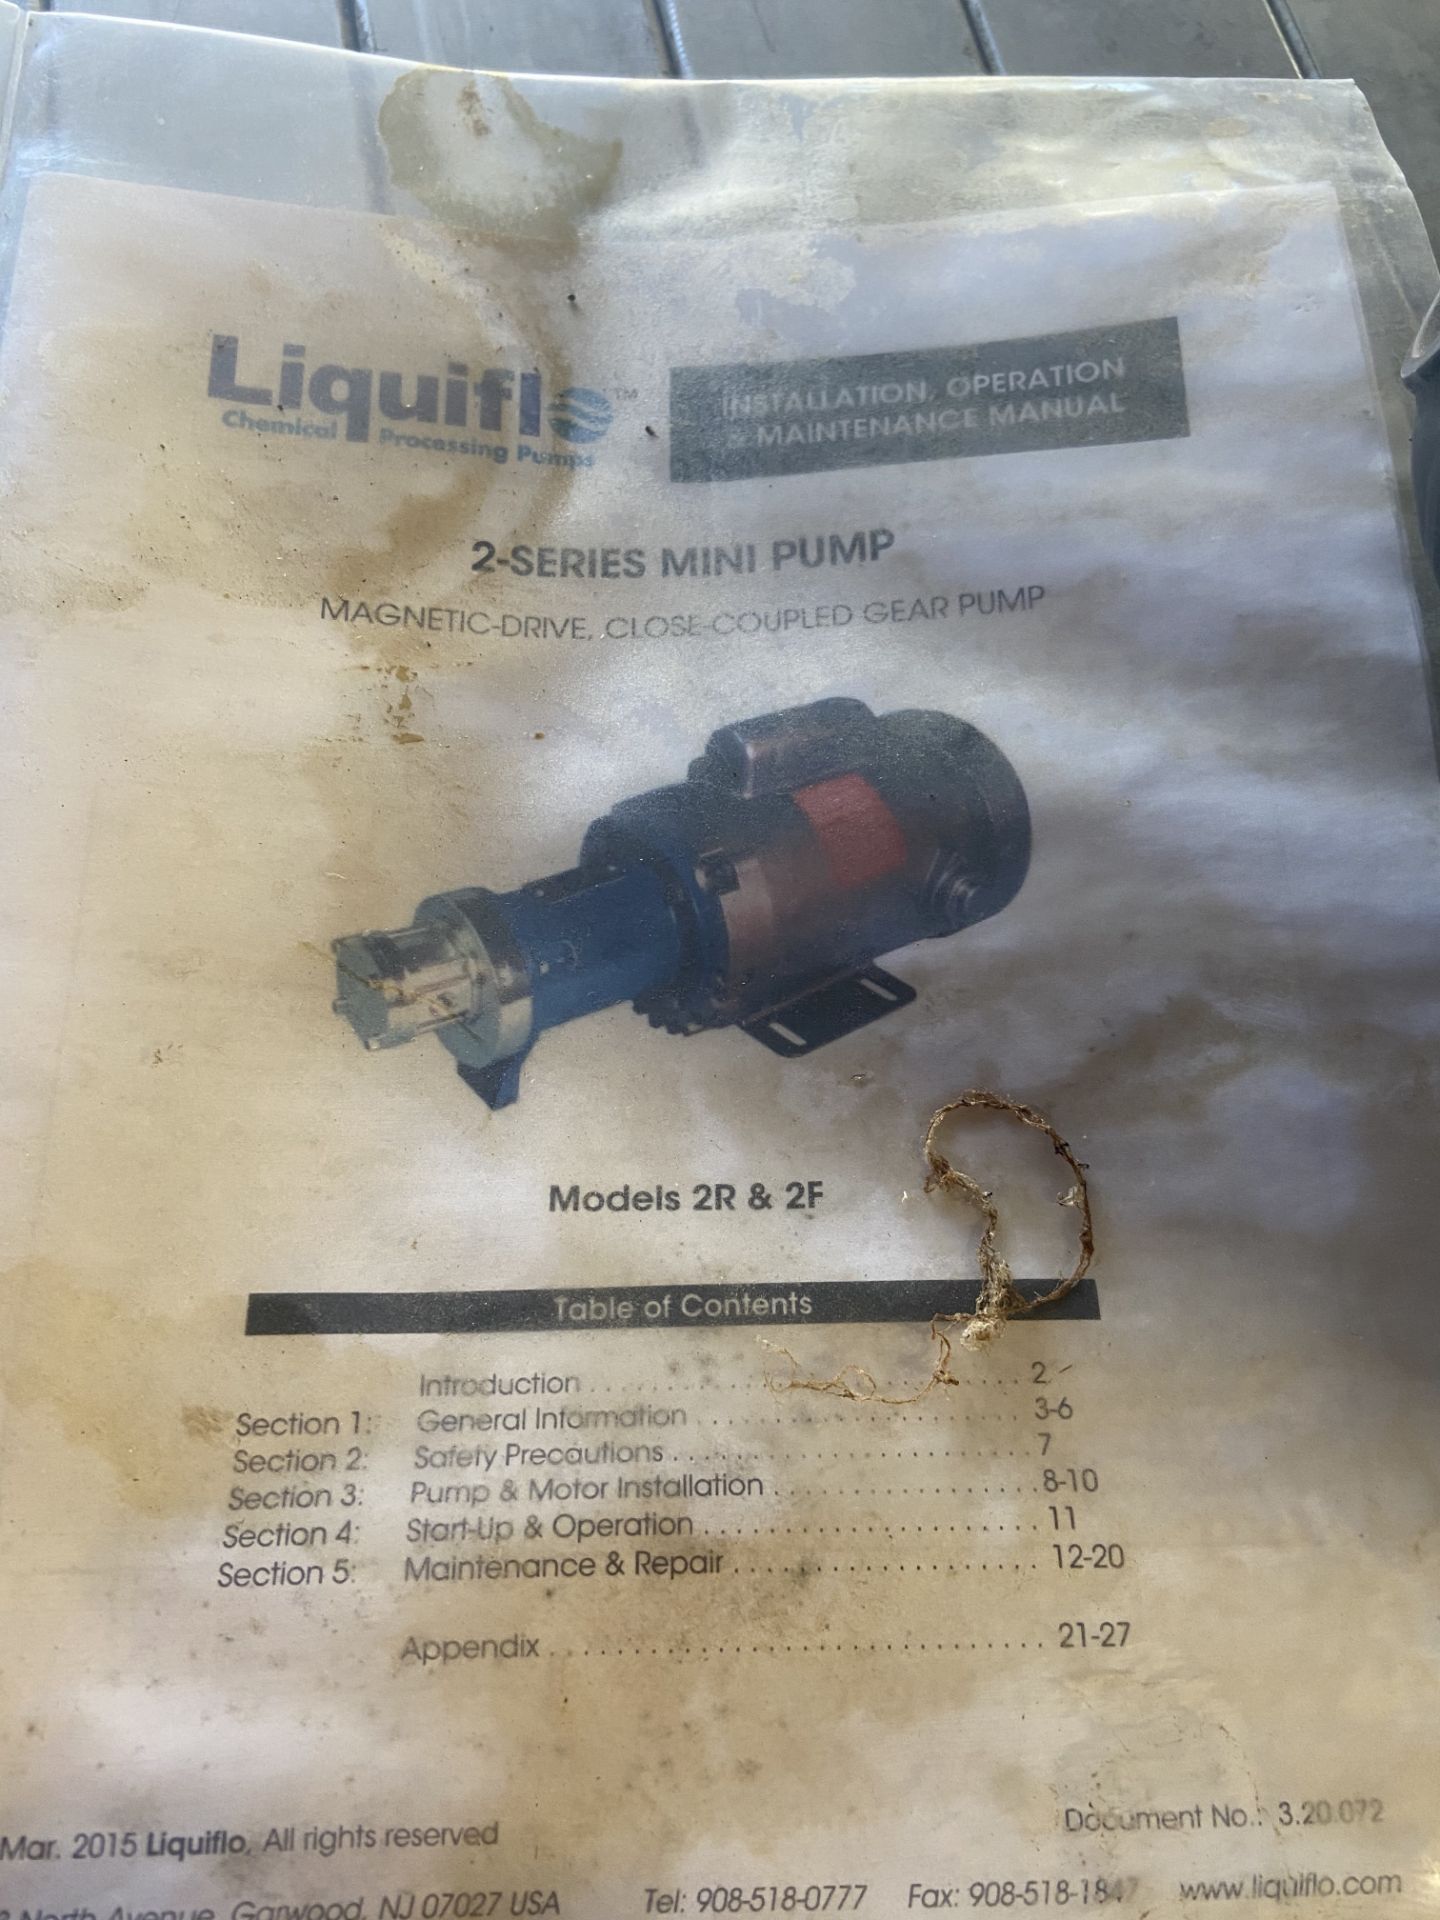 New Liquiflo 2-Series Mini Pump, Model# 2RSPPP20VX, Serial# 92091-1-1, Rigging/ Loading Fee: $10 - Image 4 of 6